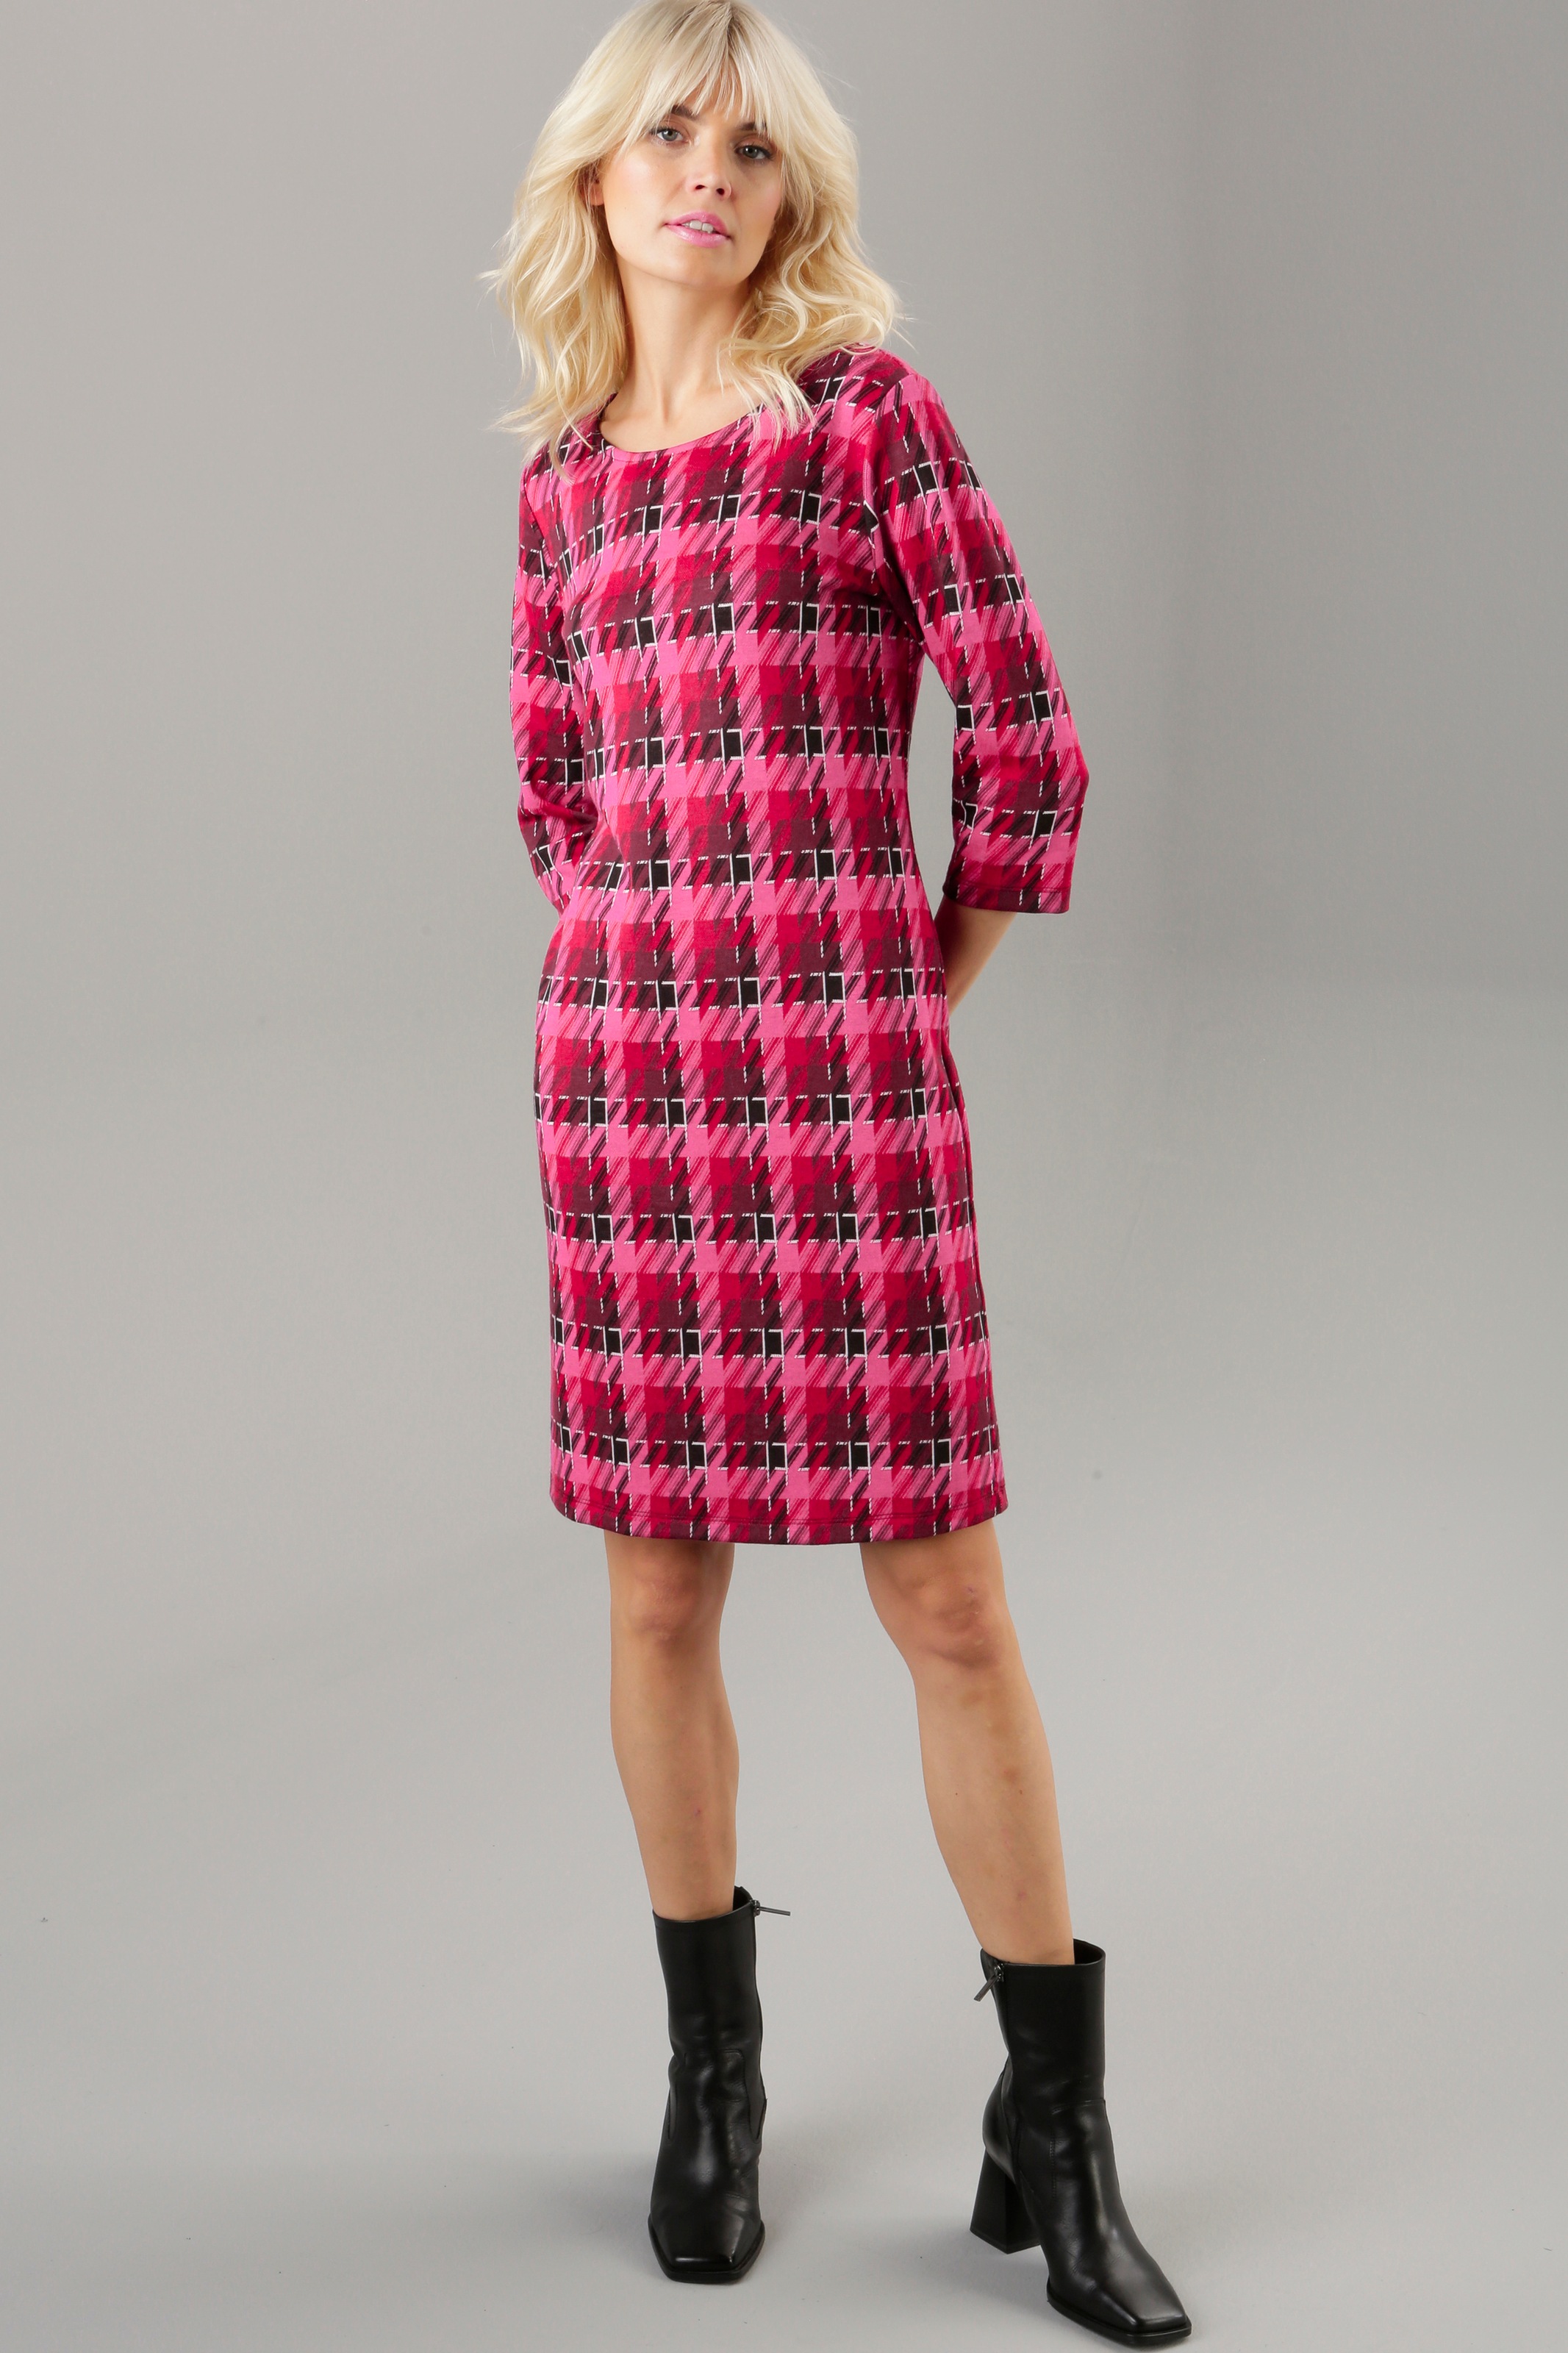 Aniston SELECTED Jerseykleid, mit Knallfarben bei OTTO Allover-Muster online bestellen in trendy